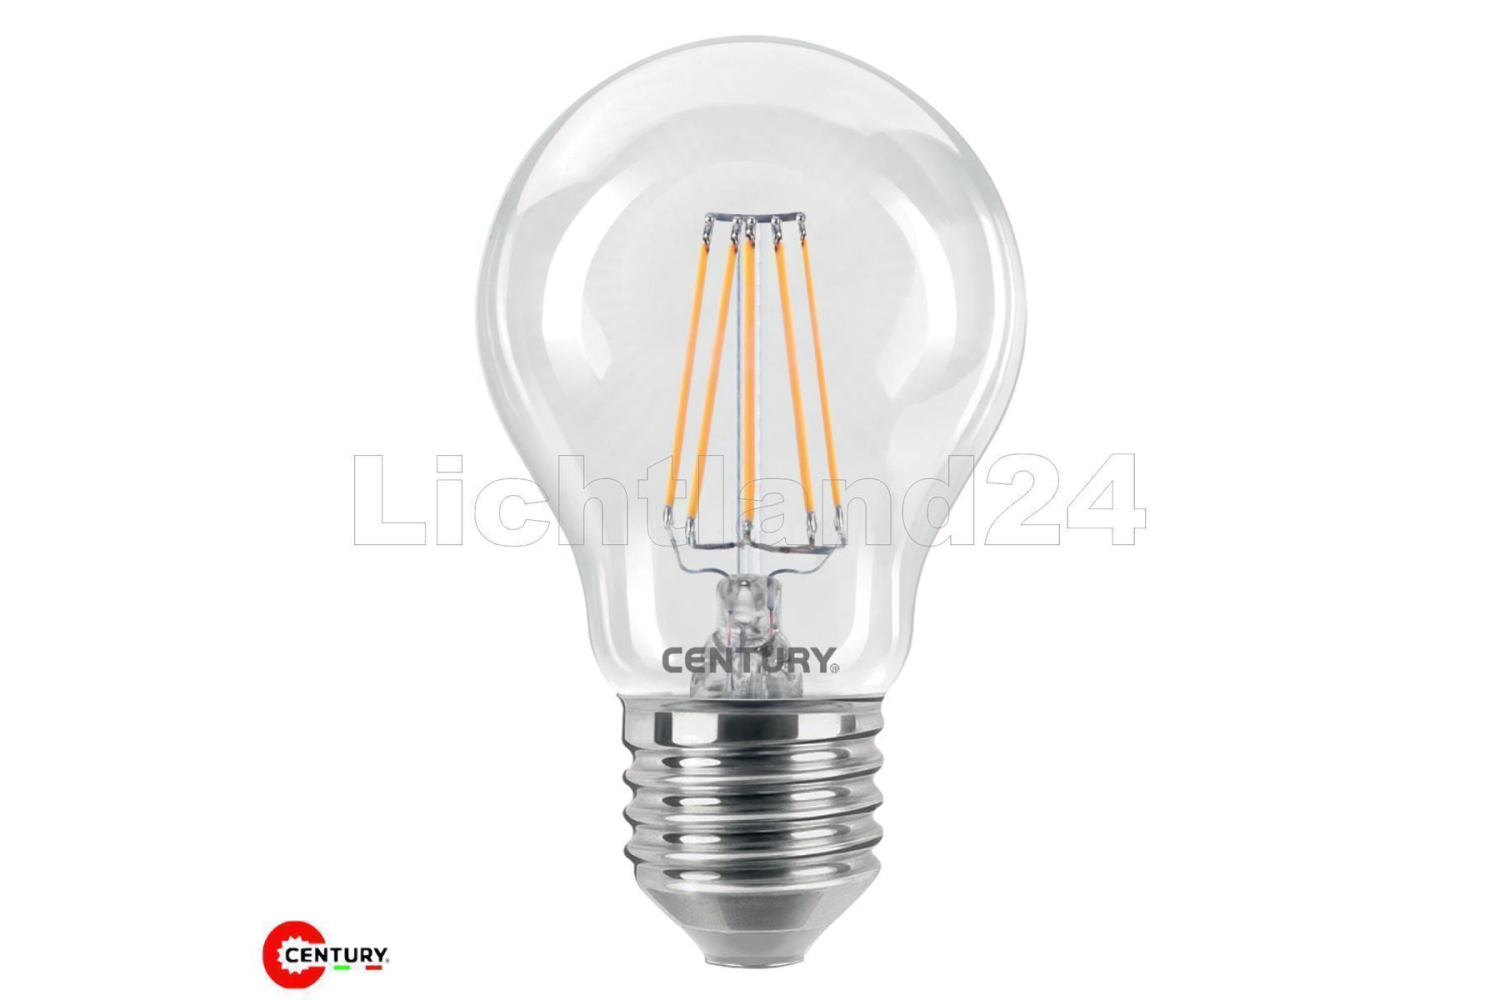 INCANTO A67-8W 4000K Glühbirne Lampe E27 LED Filament Birne = 75W 